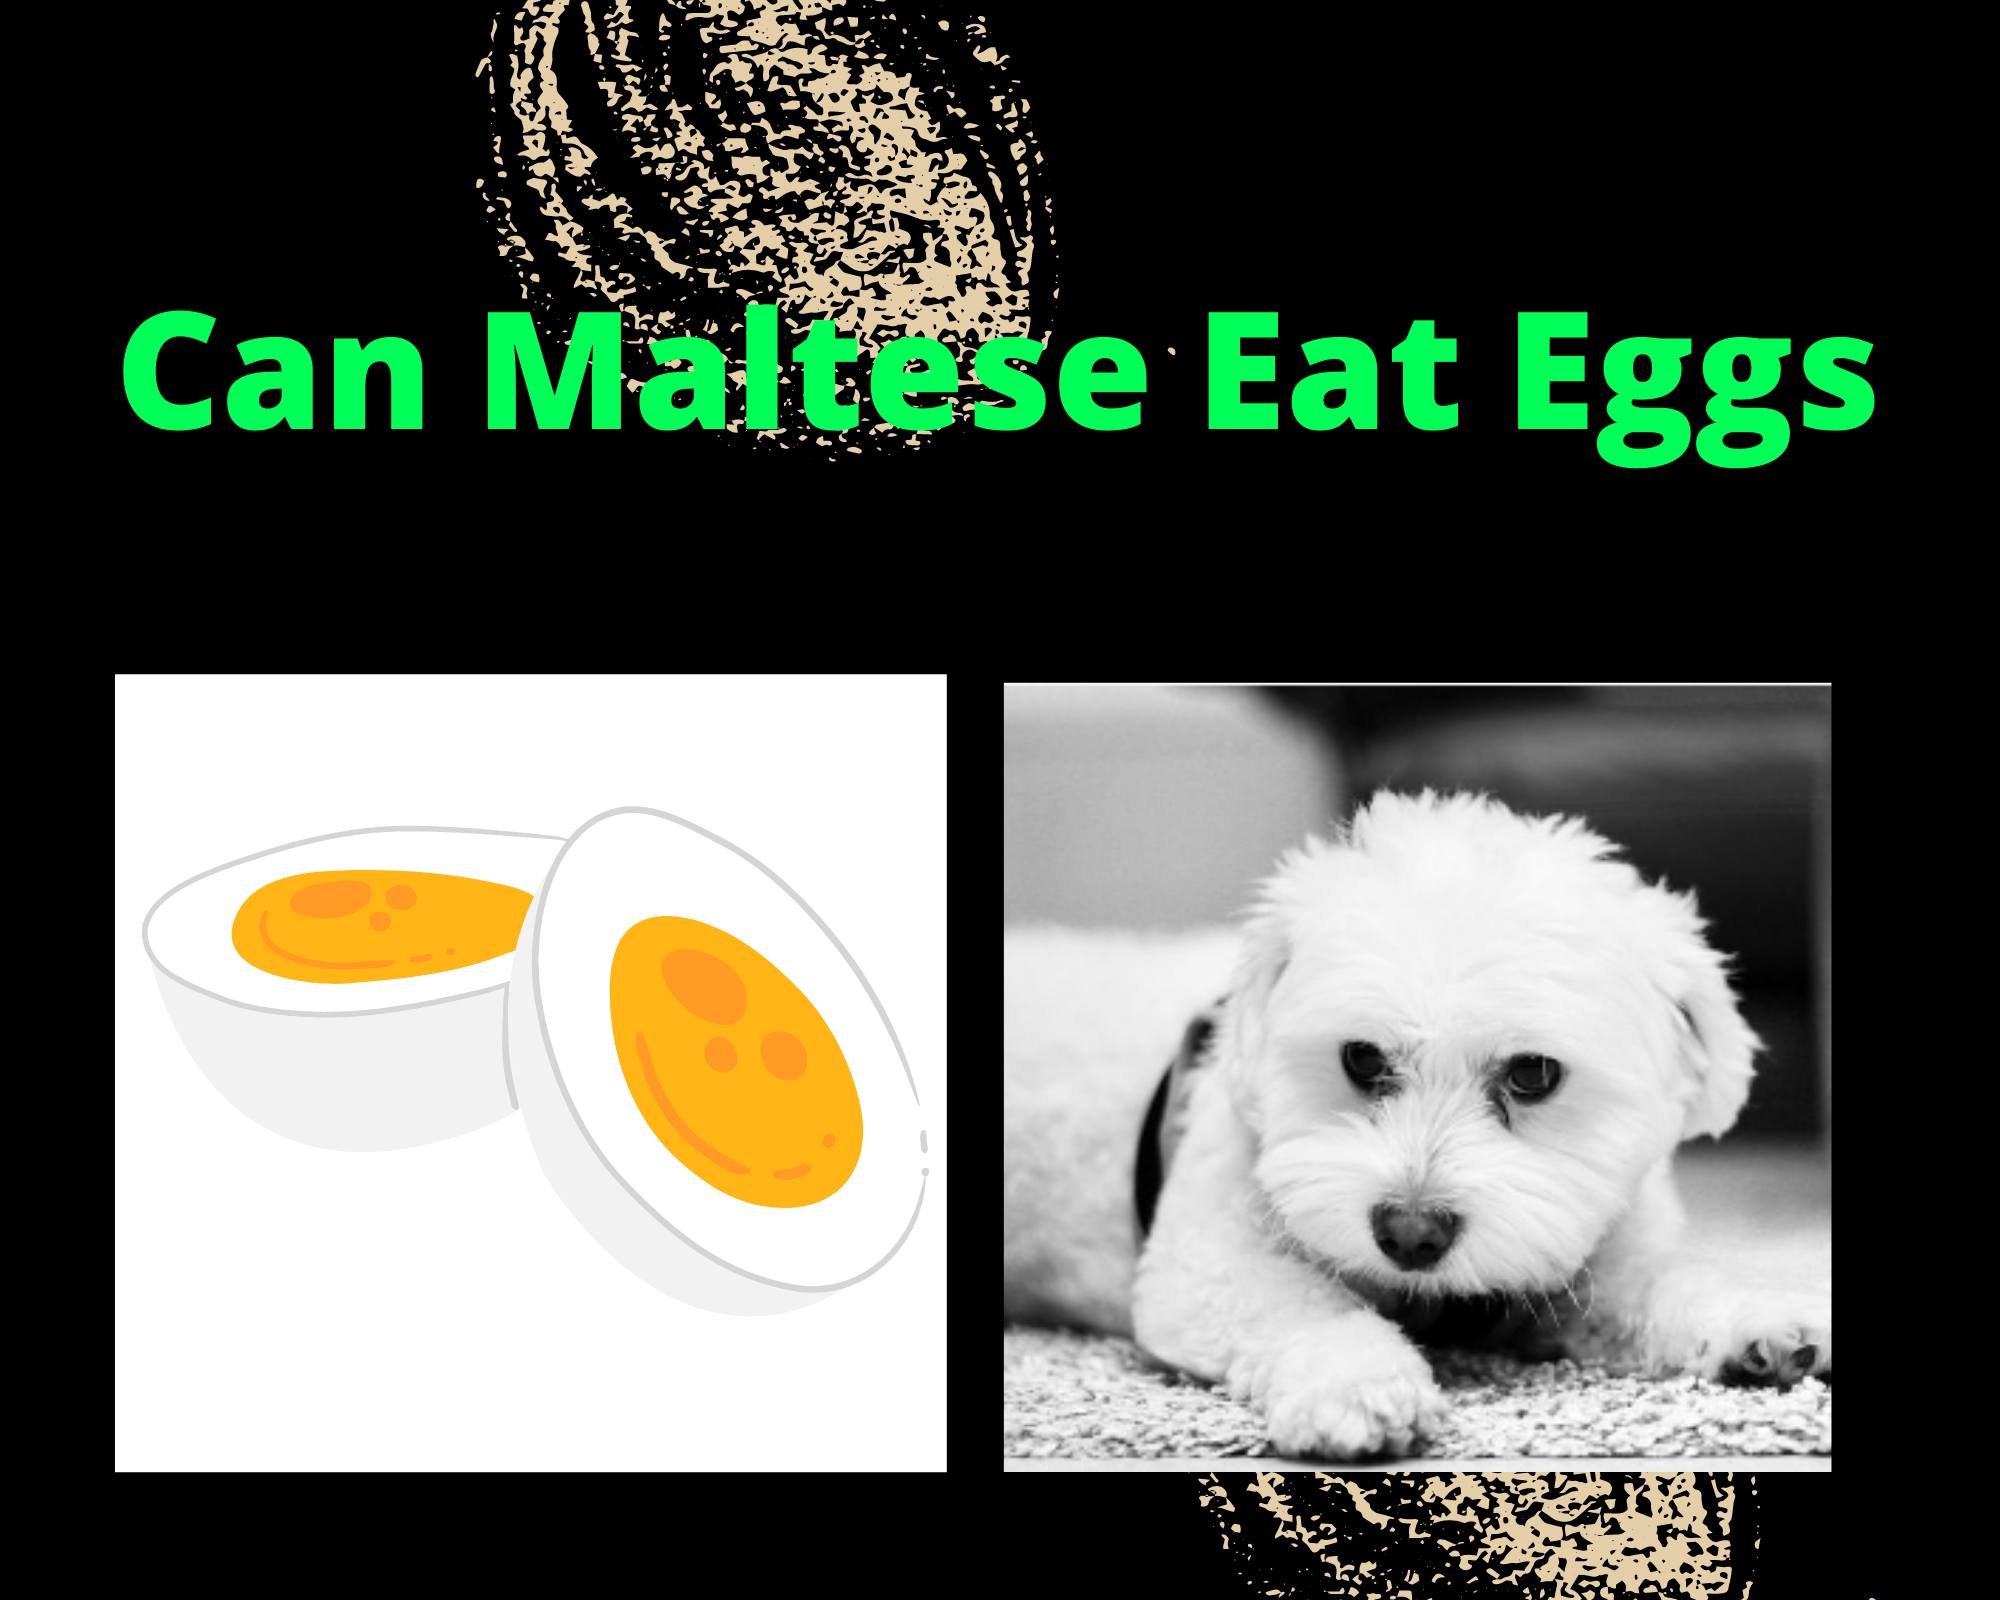 can maltese eat eggs?